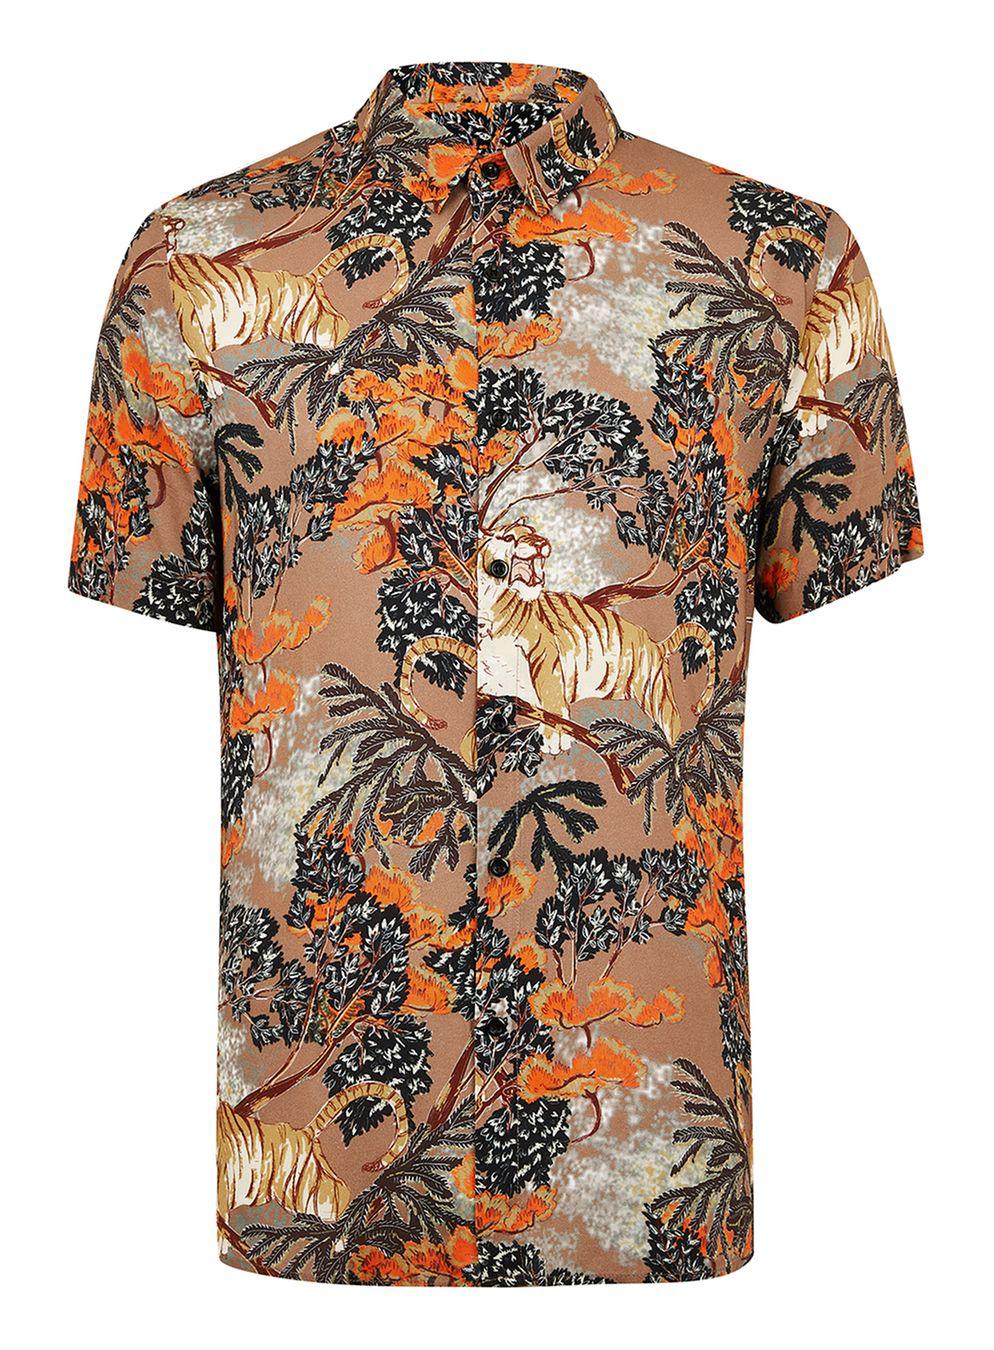 TOPMAN Synthetic Tiger Print Slim Shirt for Men - Lyst